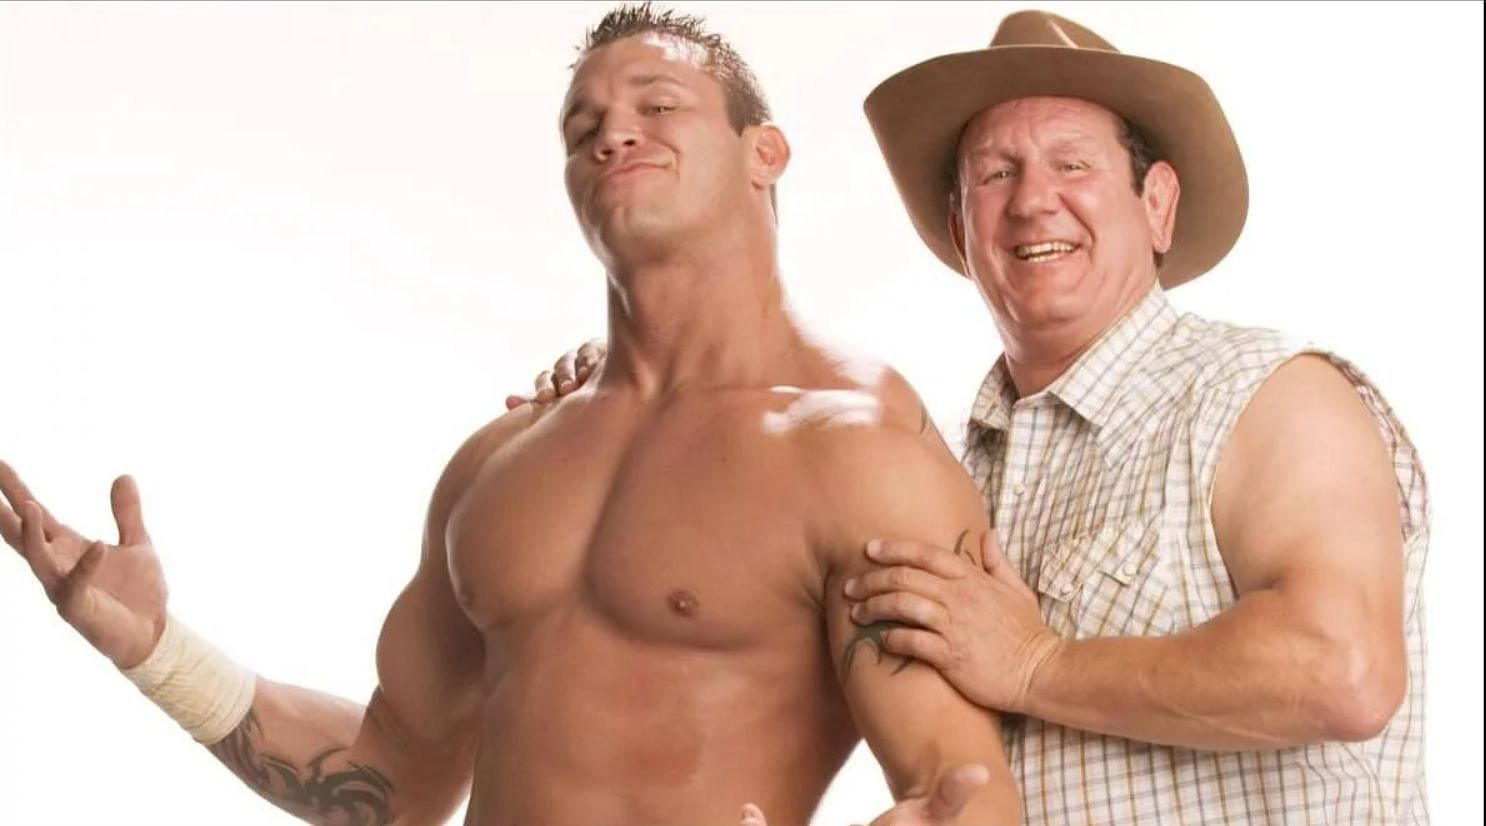 WWE Hall of Famer Bob Orton Jr. managed his son Randy Orton in 2005-06